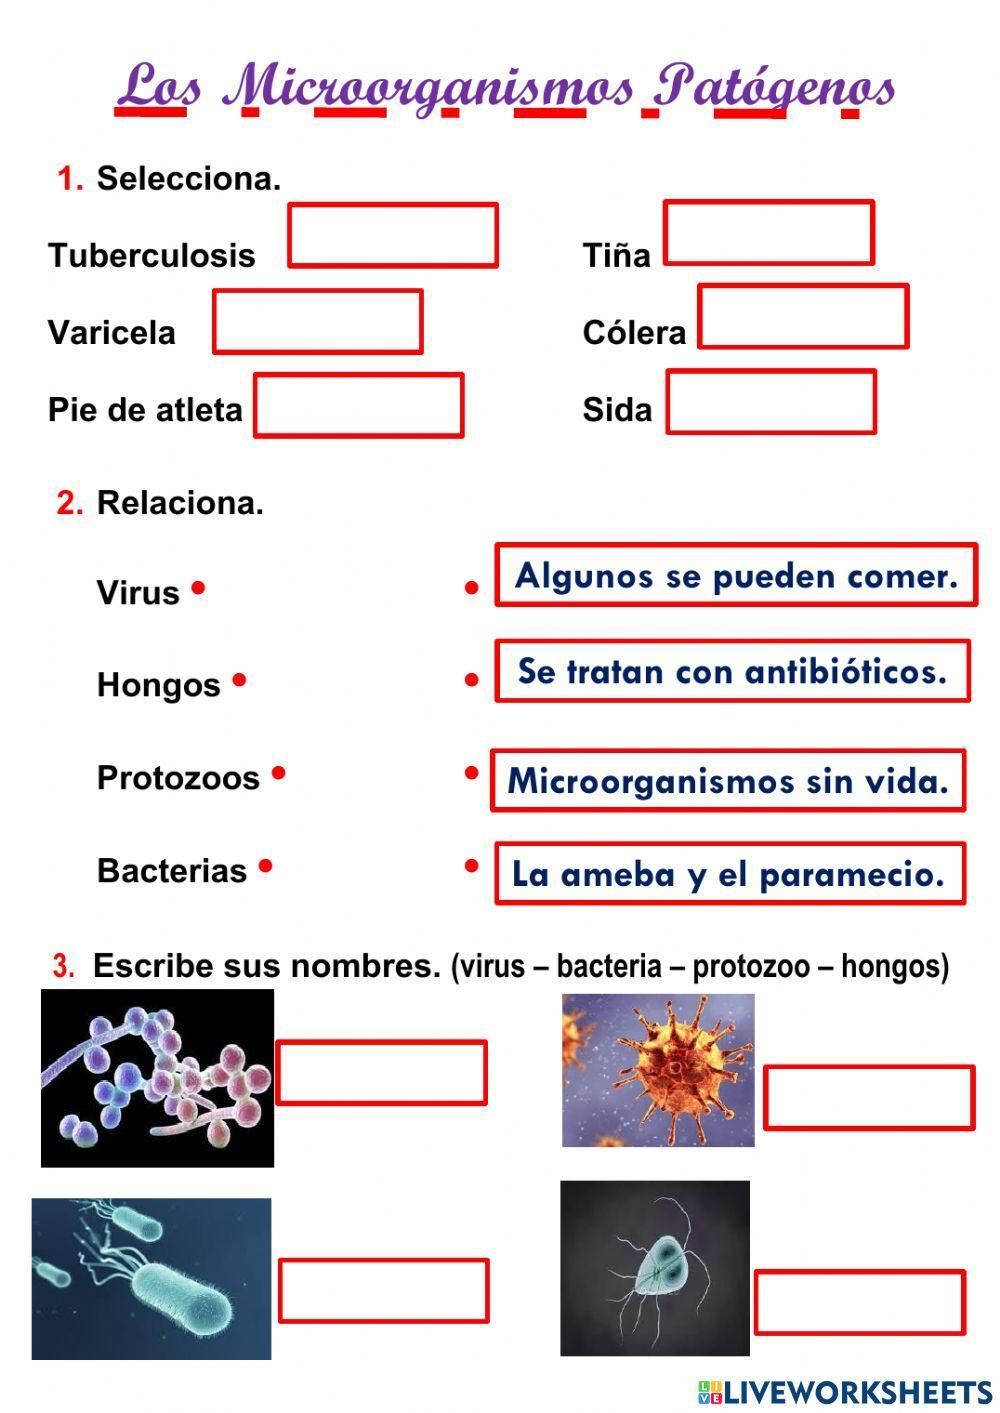 Microorganismos patógenos